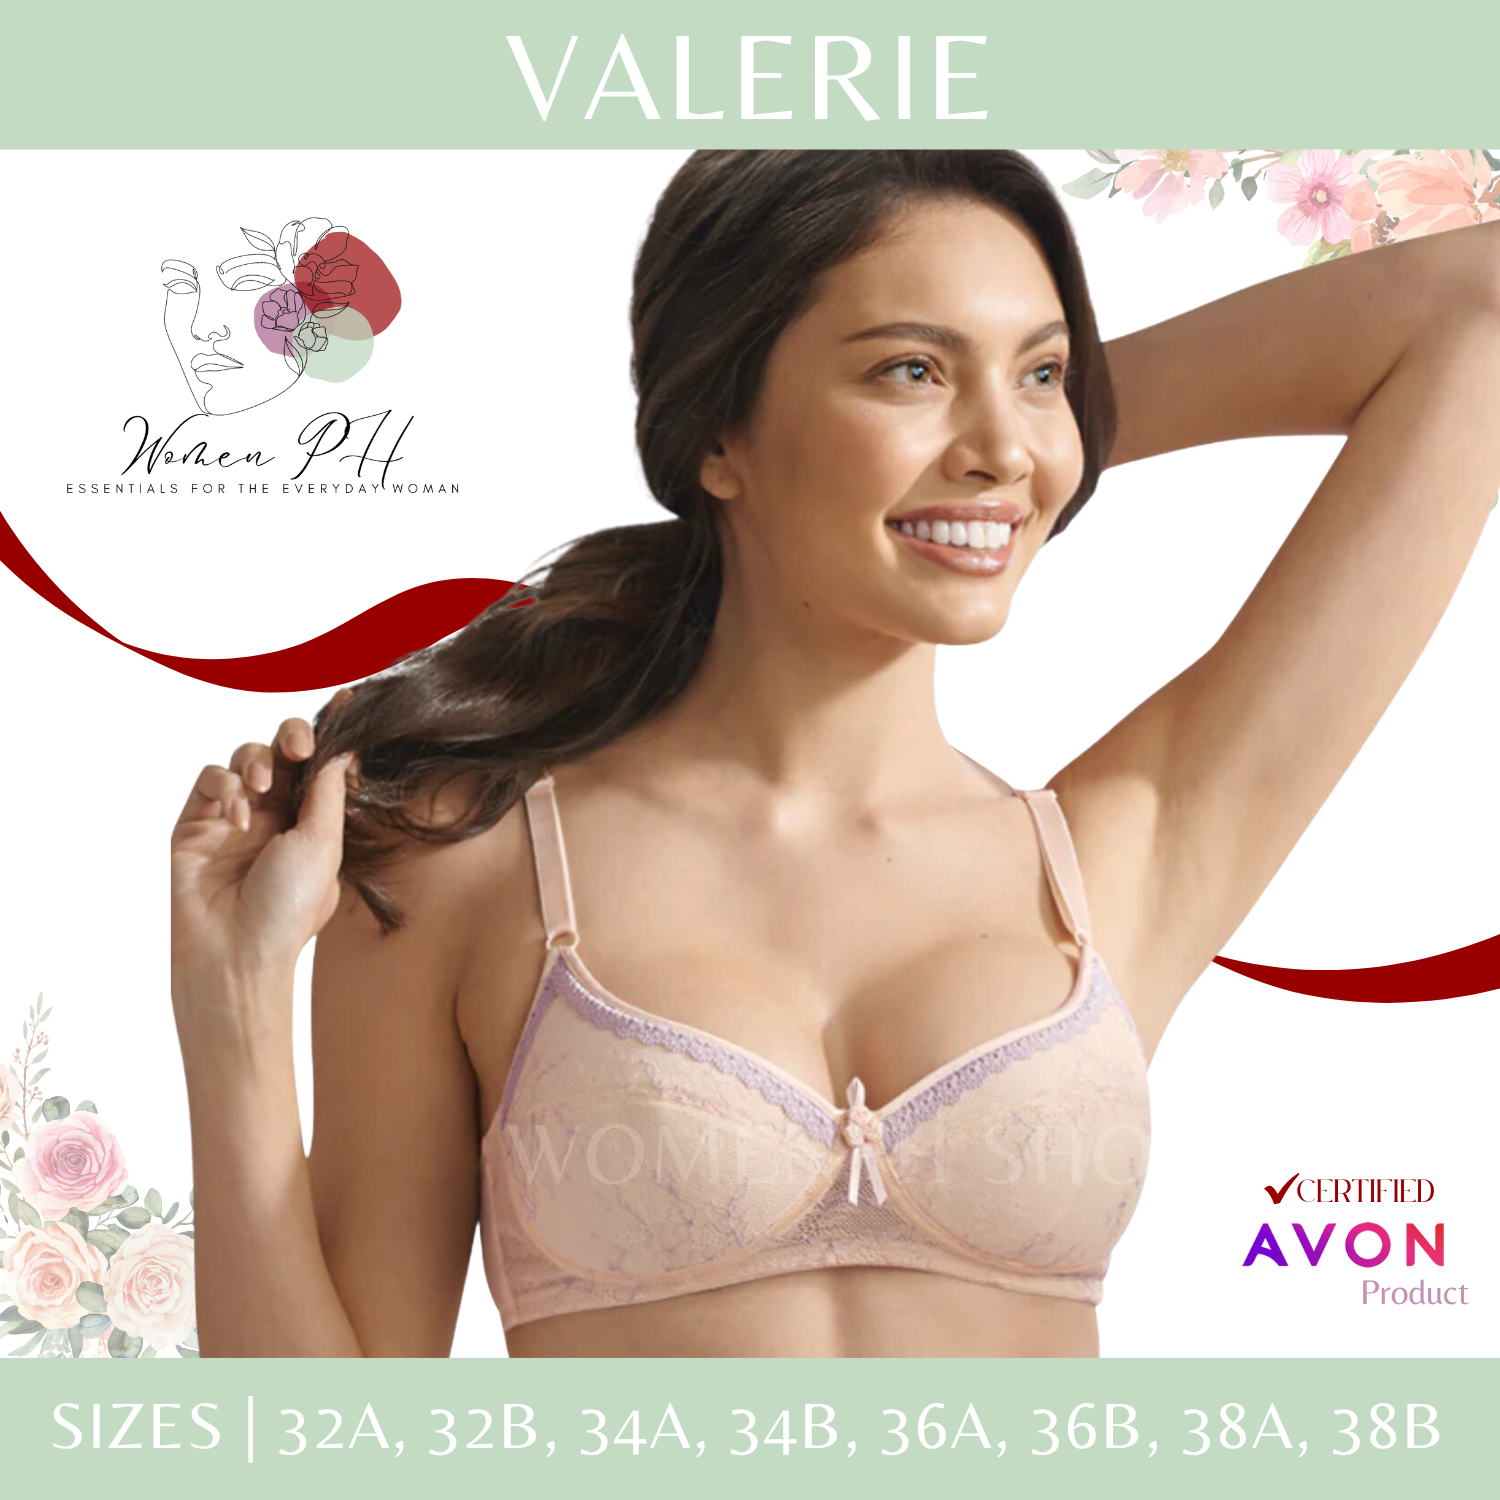 Avon - Product Detail : Valerie Non-wire Lace Bra